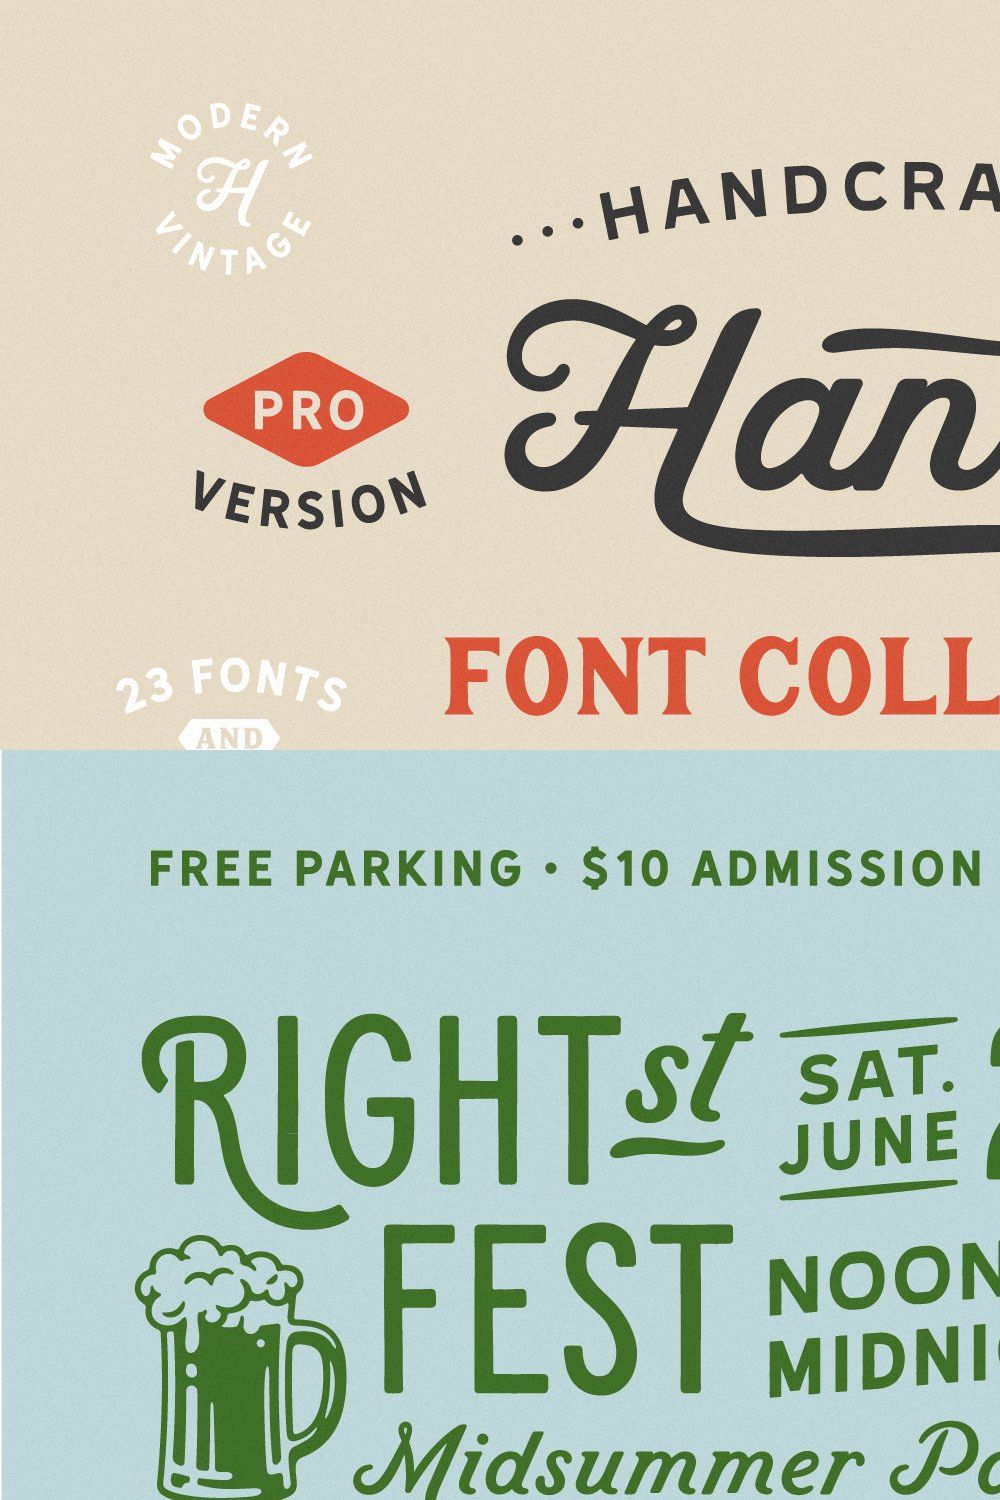 Hanley Pro Font Collection pinterest preview image.